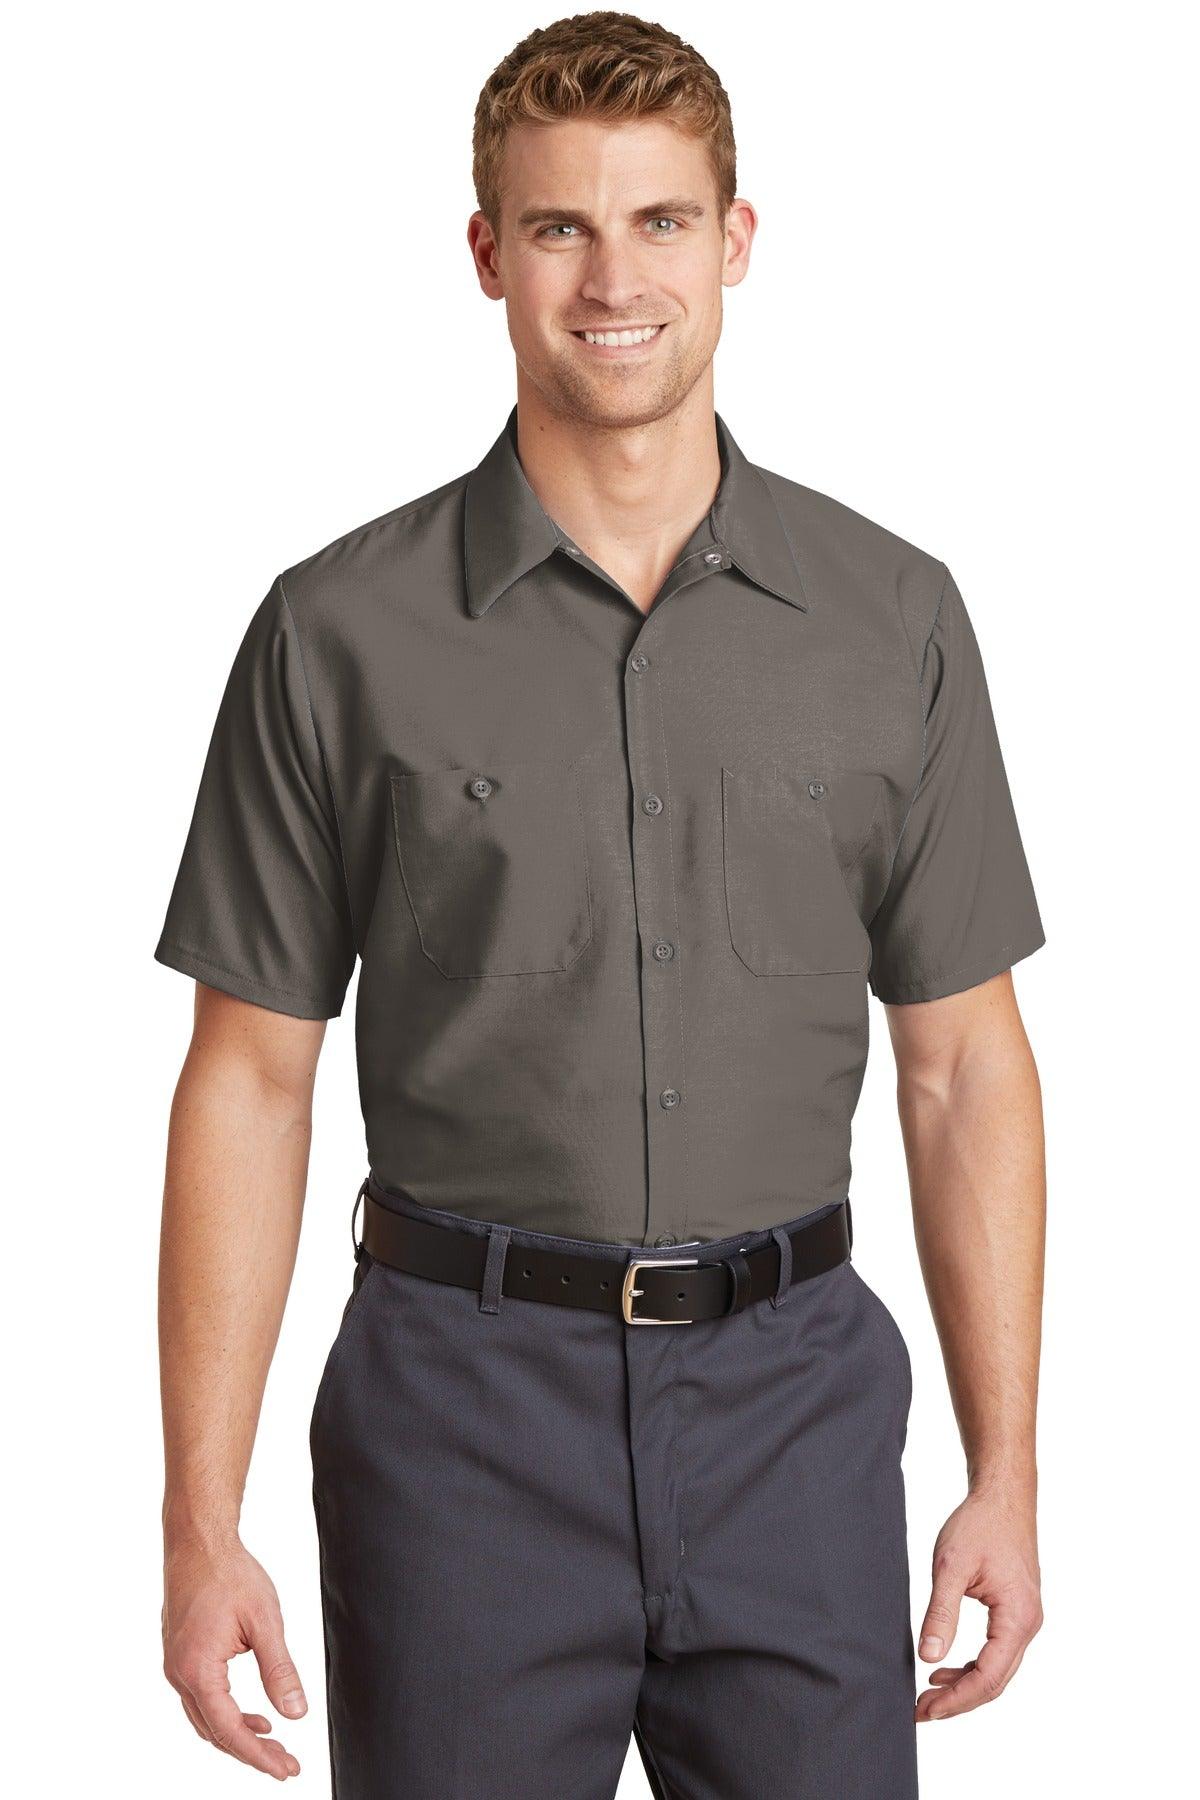 Red Kap Short Sleeve Industrial Work Shirt. SP24 - Dresses Max